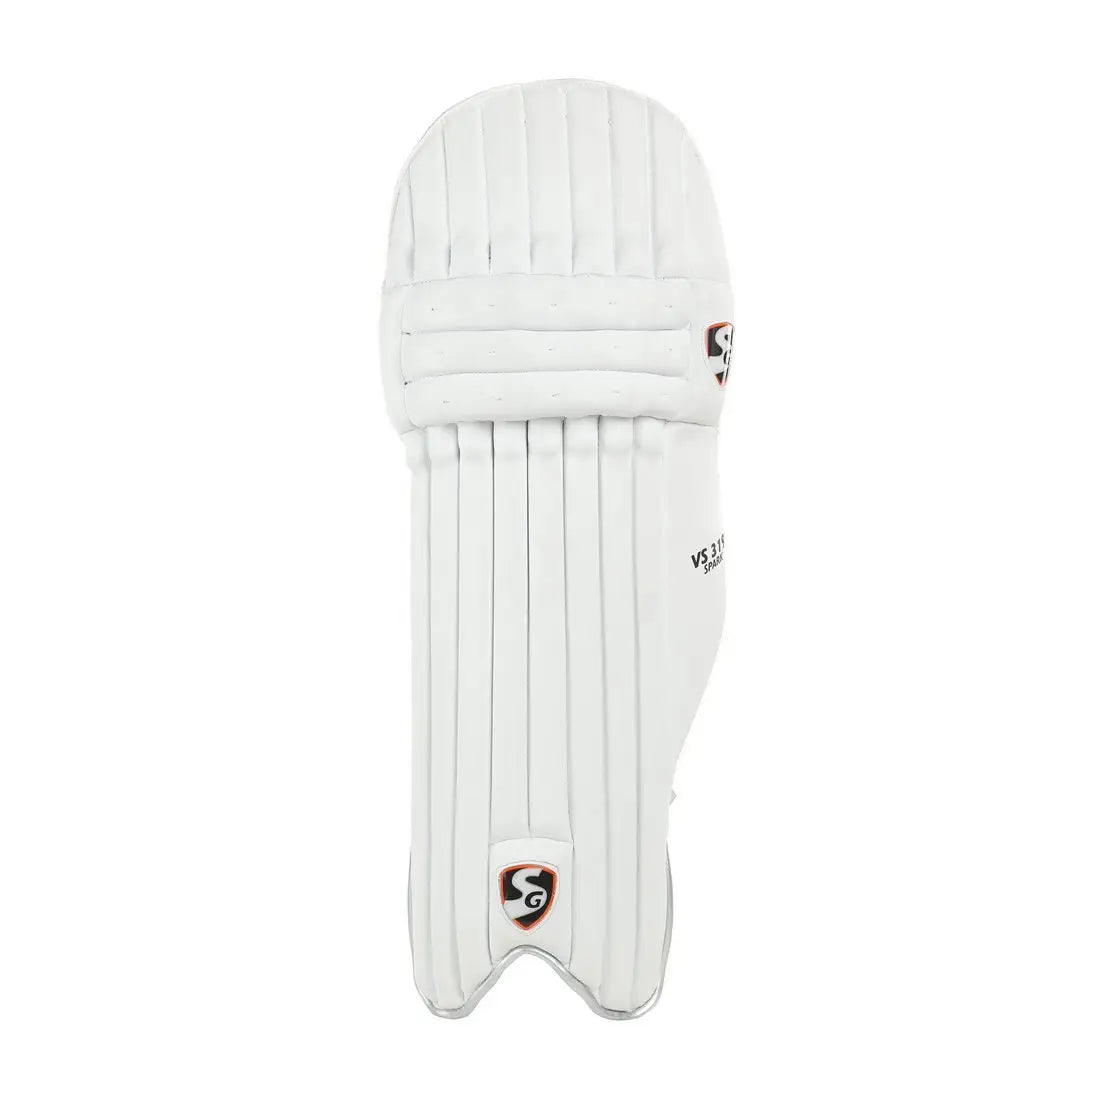 SG VS319 Spark Cricket Batting Pad Leg-guard - PADS - BATTING